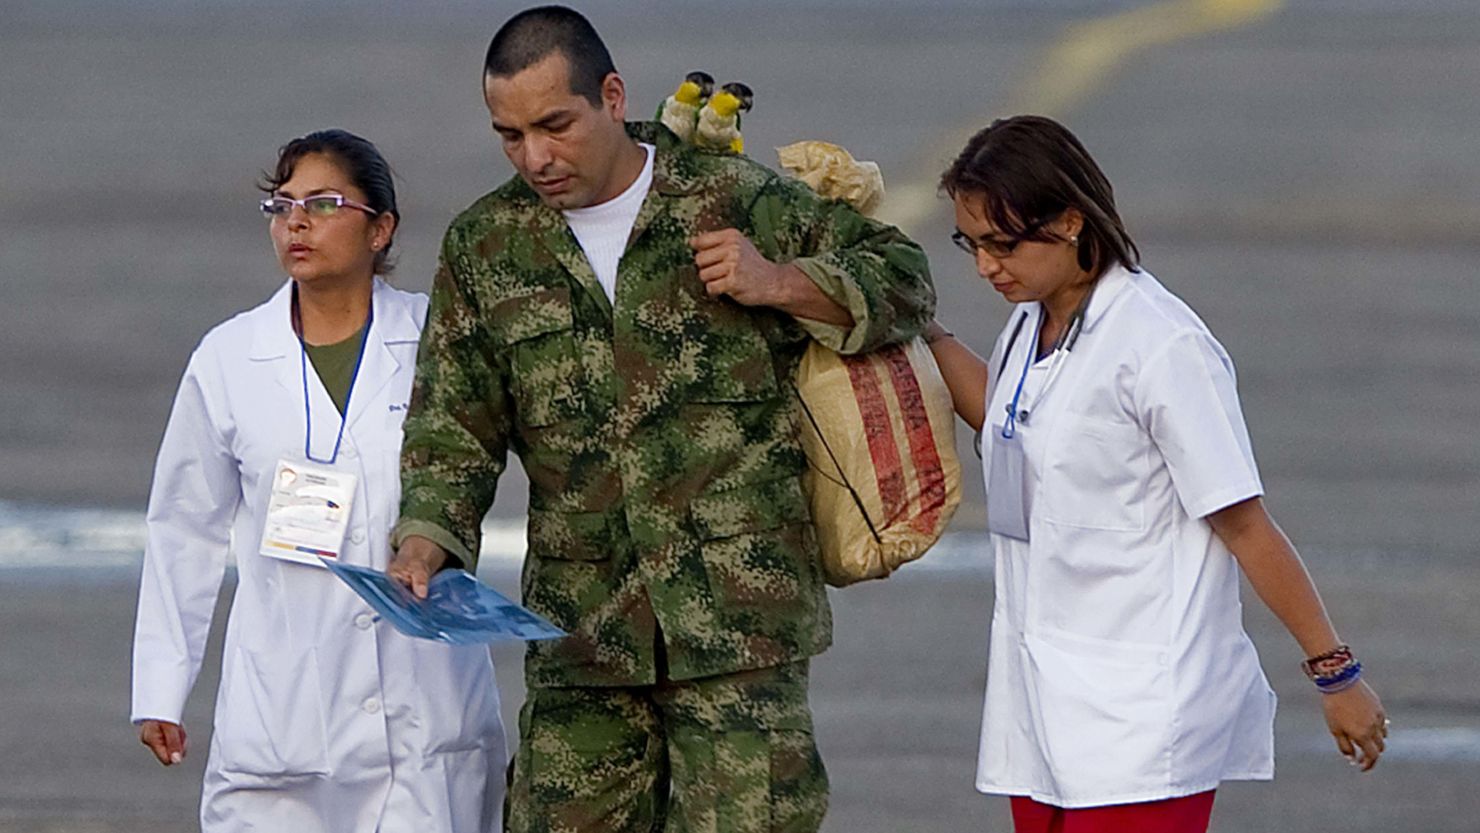 Former FARC hostage Robinson Salcedo Guarin has two birds on his shoulders upon arriving in Villavicencio, Colombia, Monday.